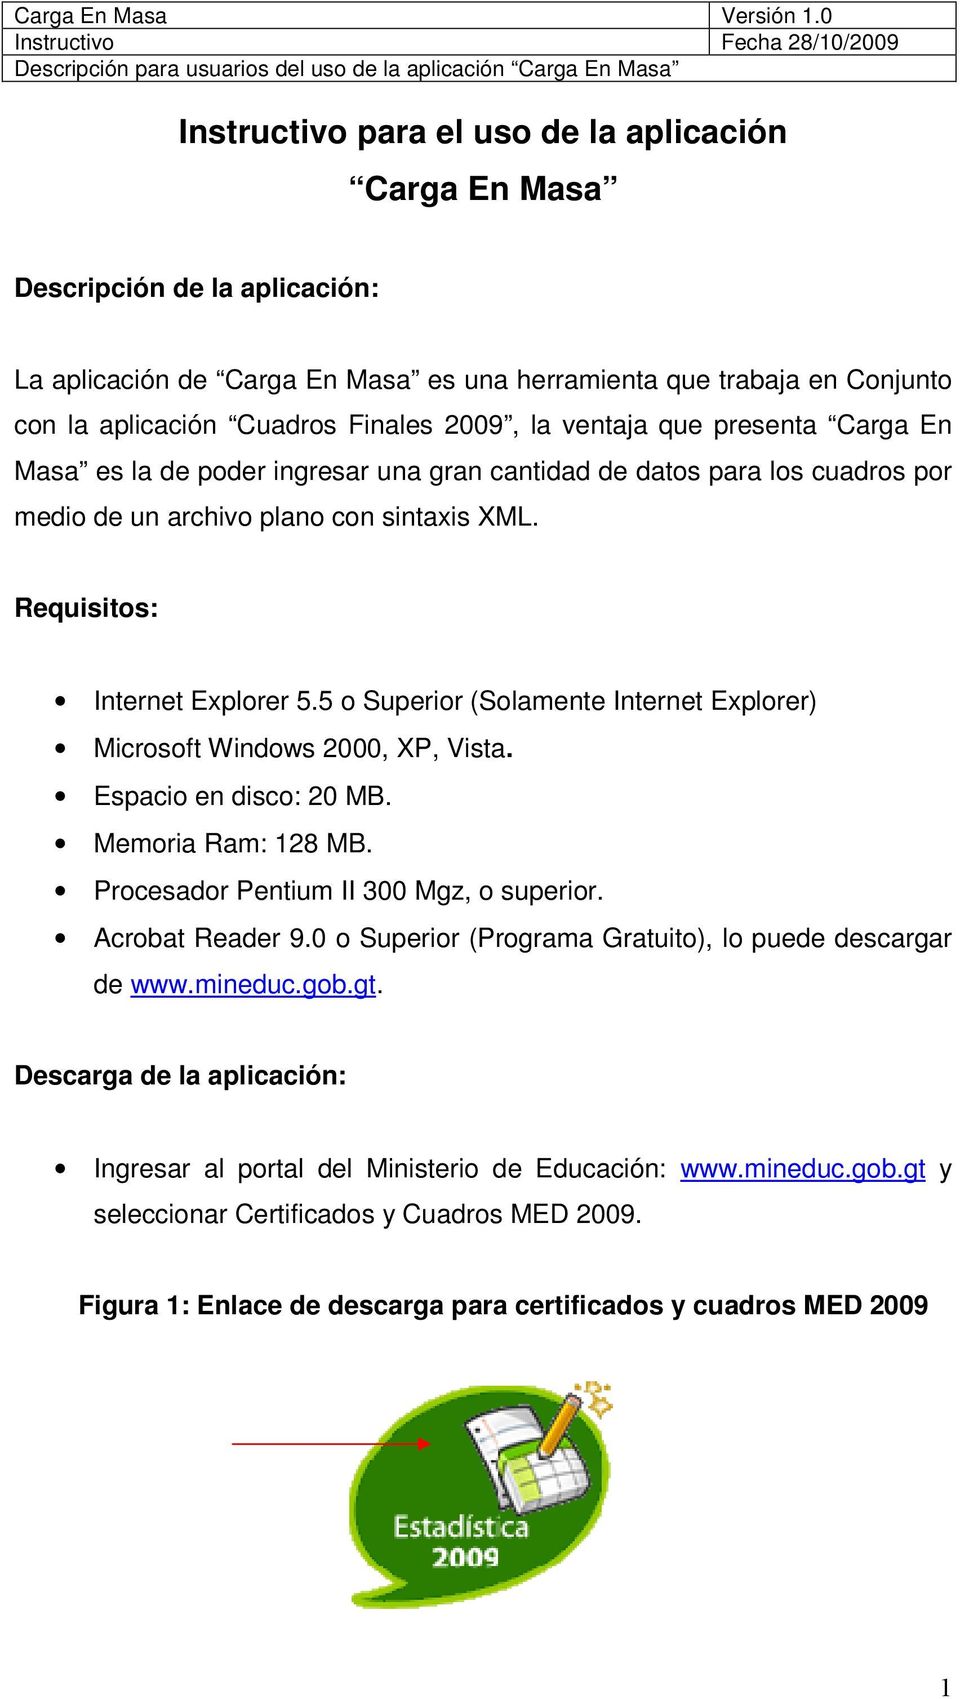 5 o Superior (Solamente Internet Explorer) Microsoft Windows 2000, XP, Vista. Espacio en disco: 20 MB. Memoria Ram: 128 MB. Procesador Pentium II 300 Mgz, o superior. Acrobat Reader 9.